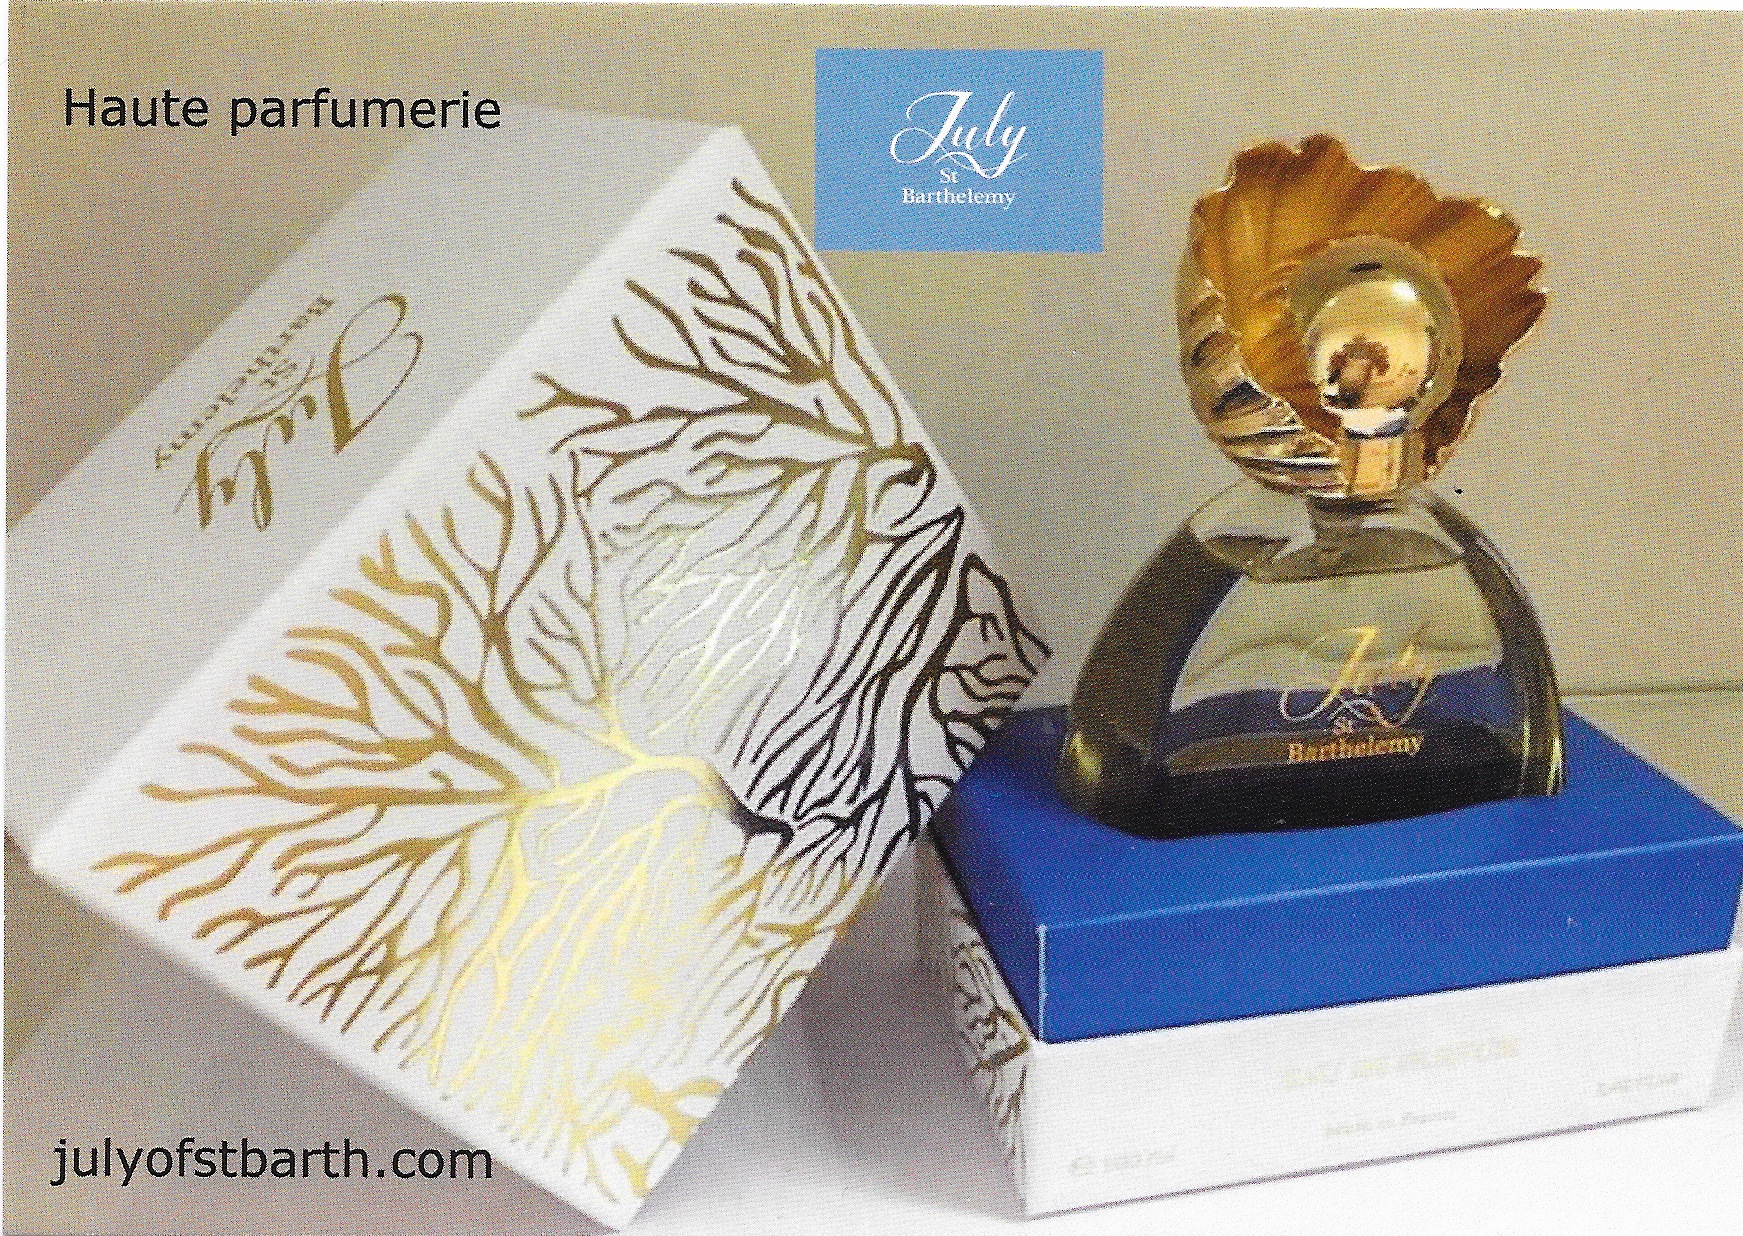 July St Barthelemy Haute parfumerie France carte parfumee perfumed card